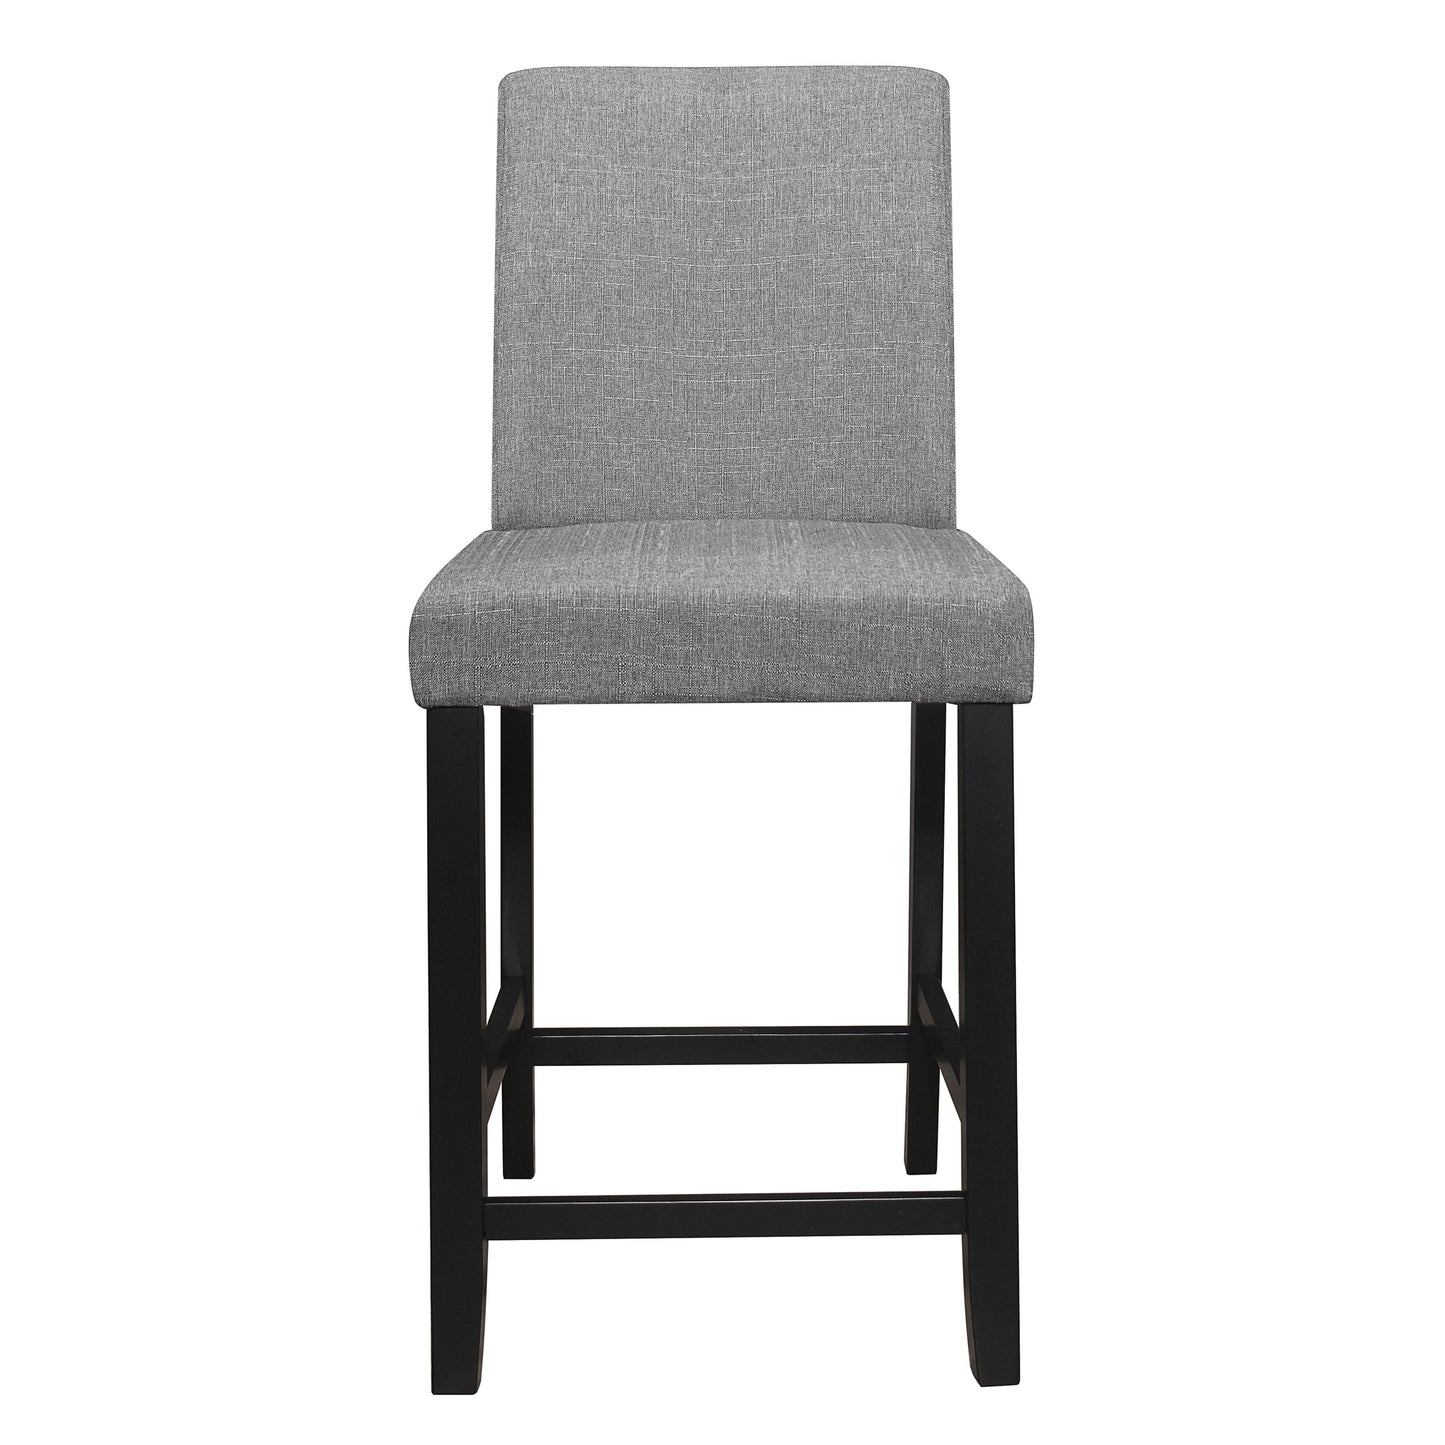 Adina Gray Counter Height Chair, Set of 2